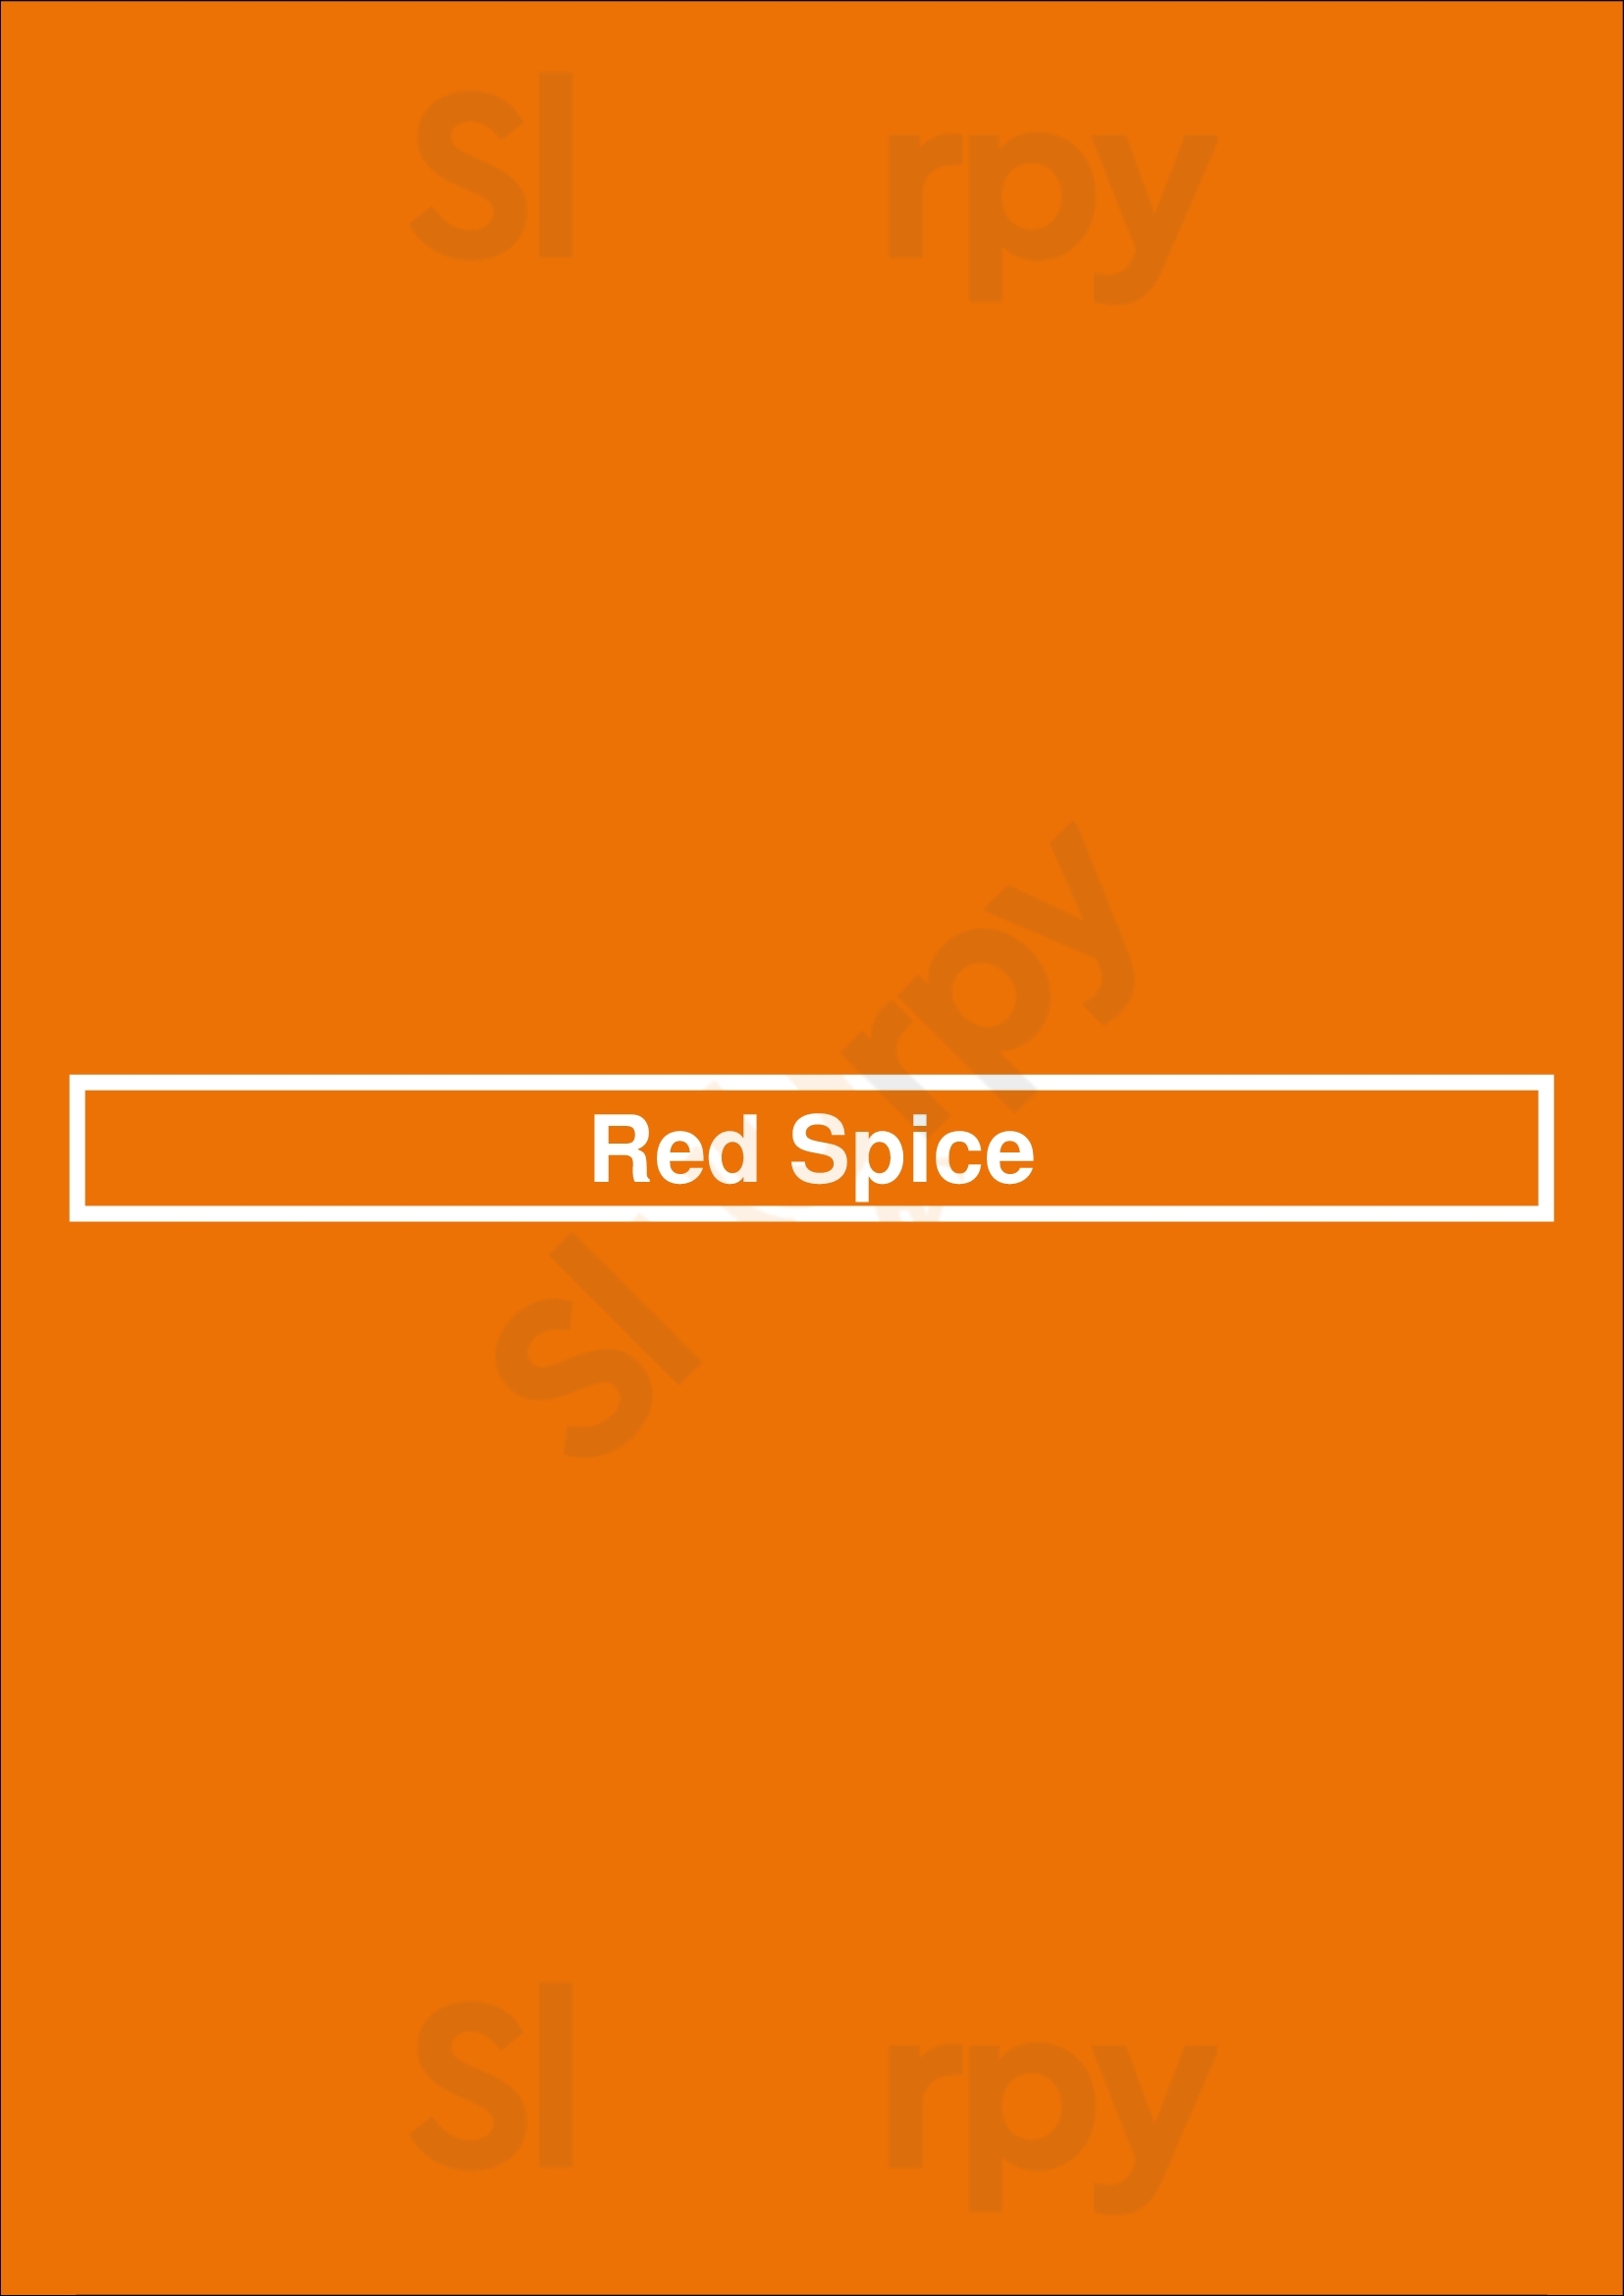 Red Spice London Menu - 1